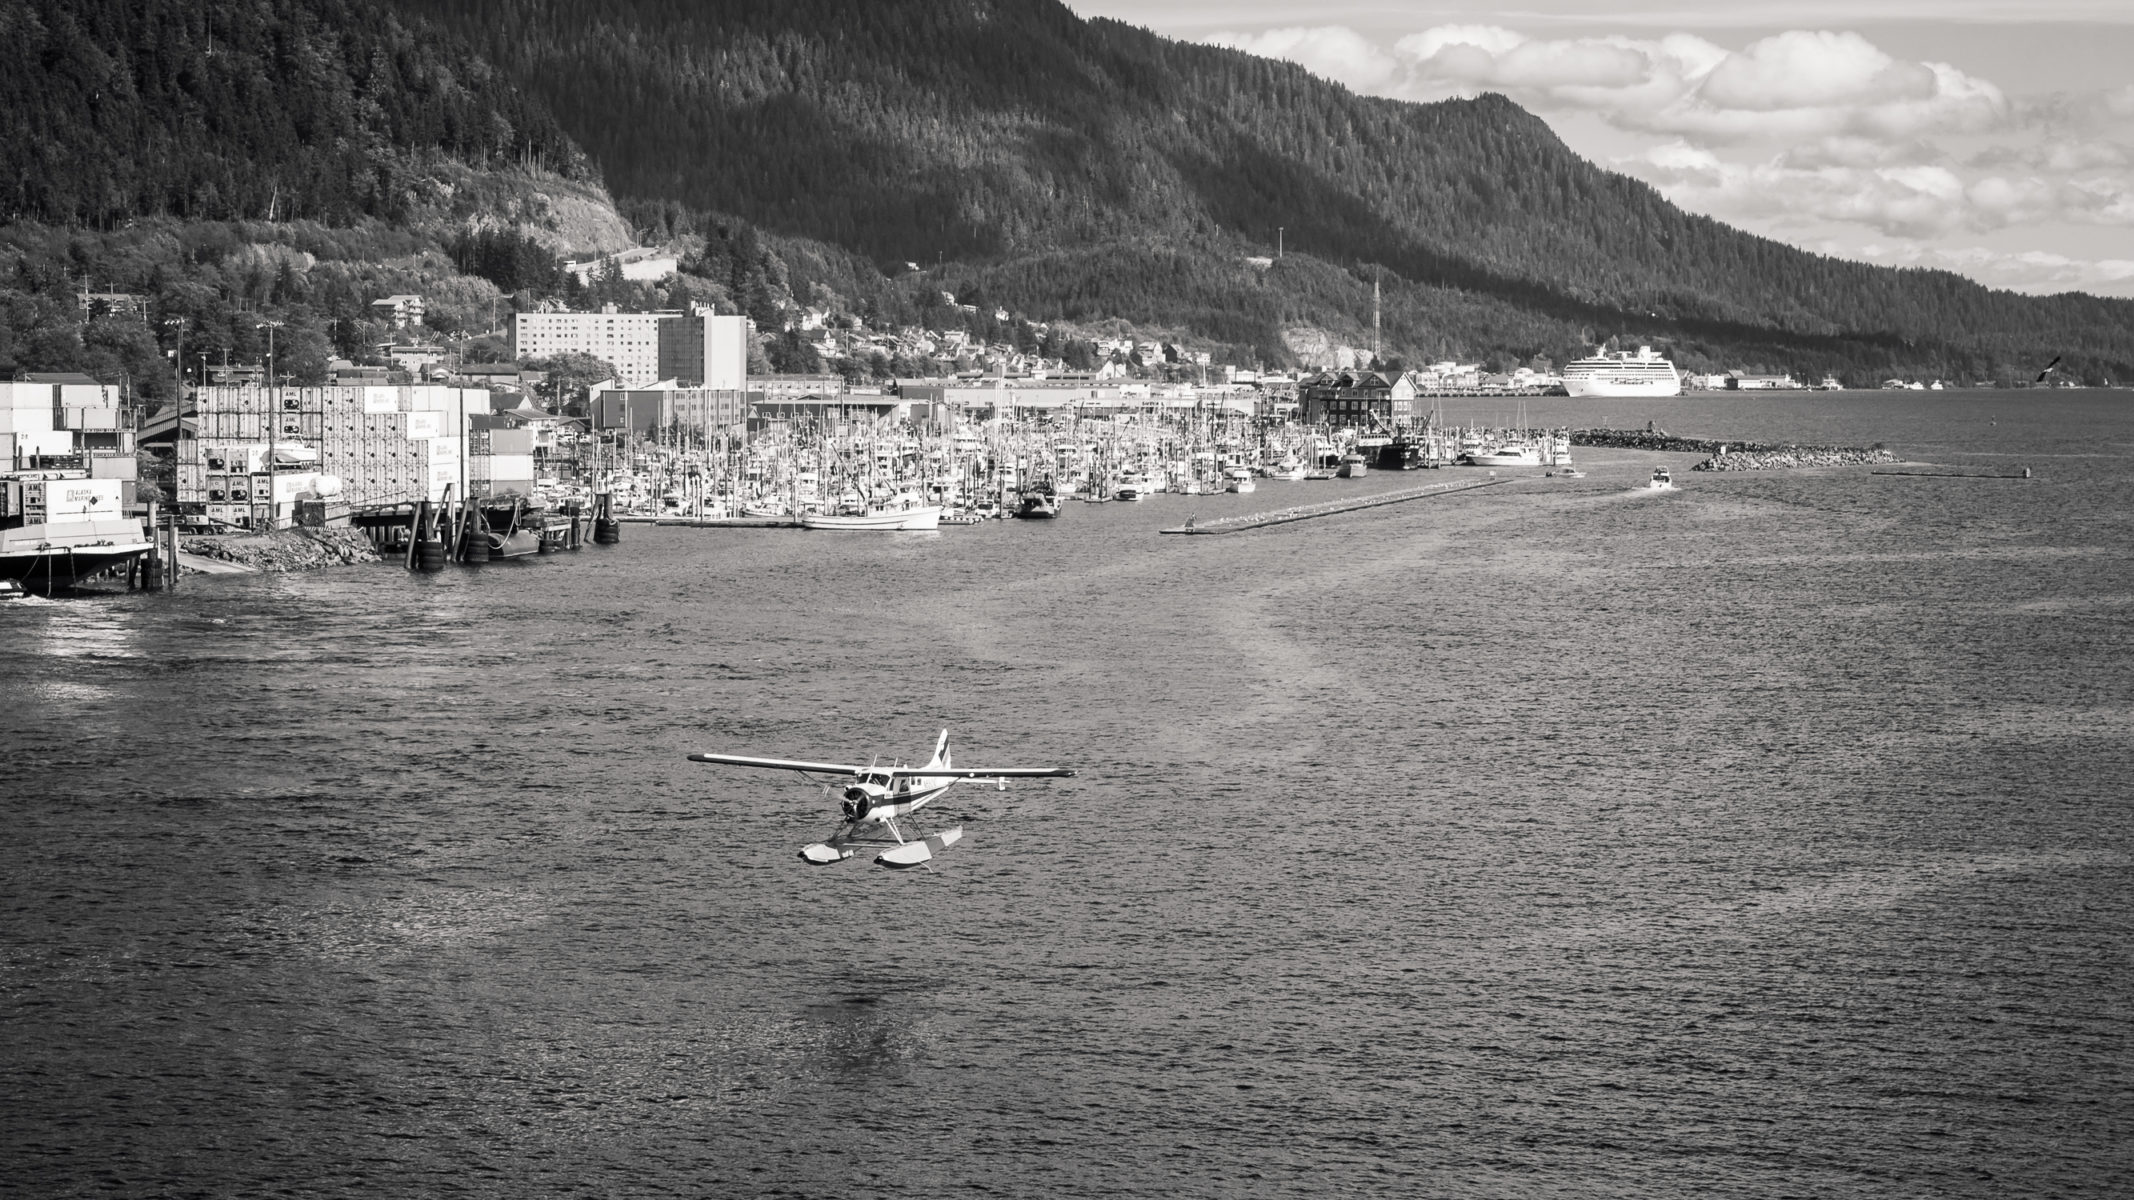 seaplane landing on water in Ketchikan Alaska